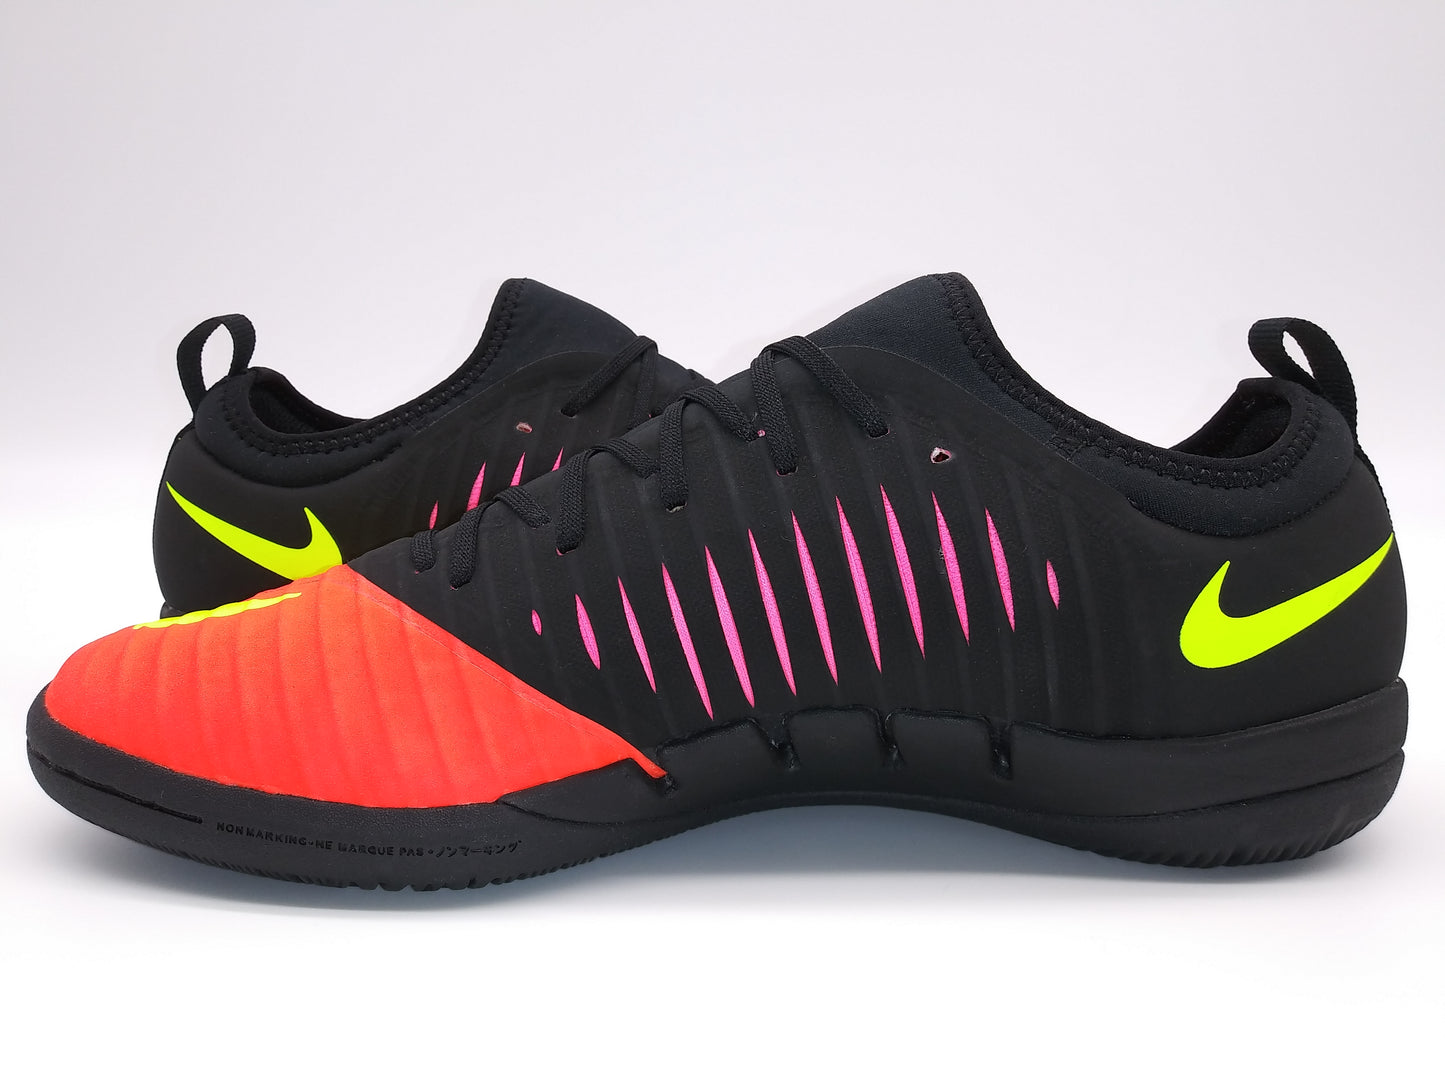 Nike Mercurialx Finale II IC Black Pink